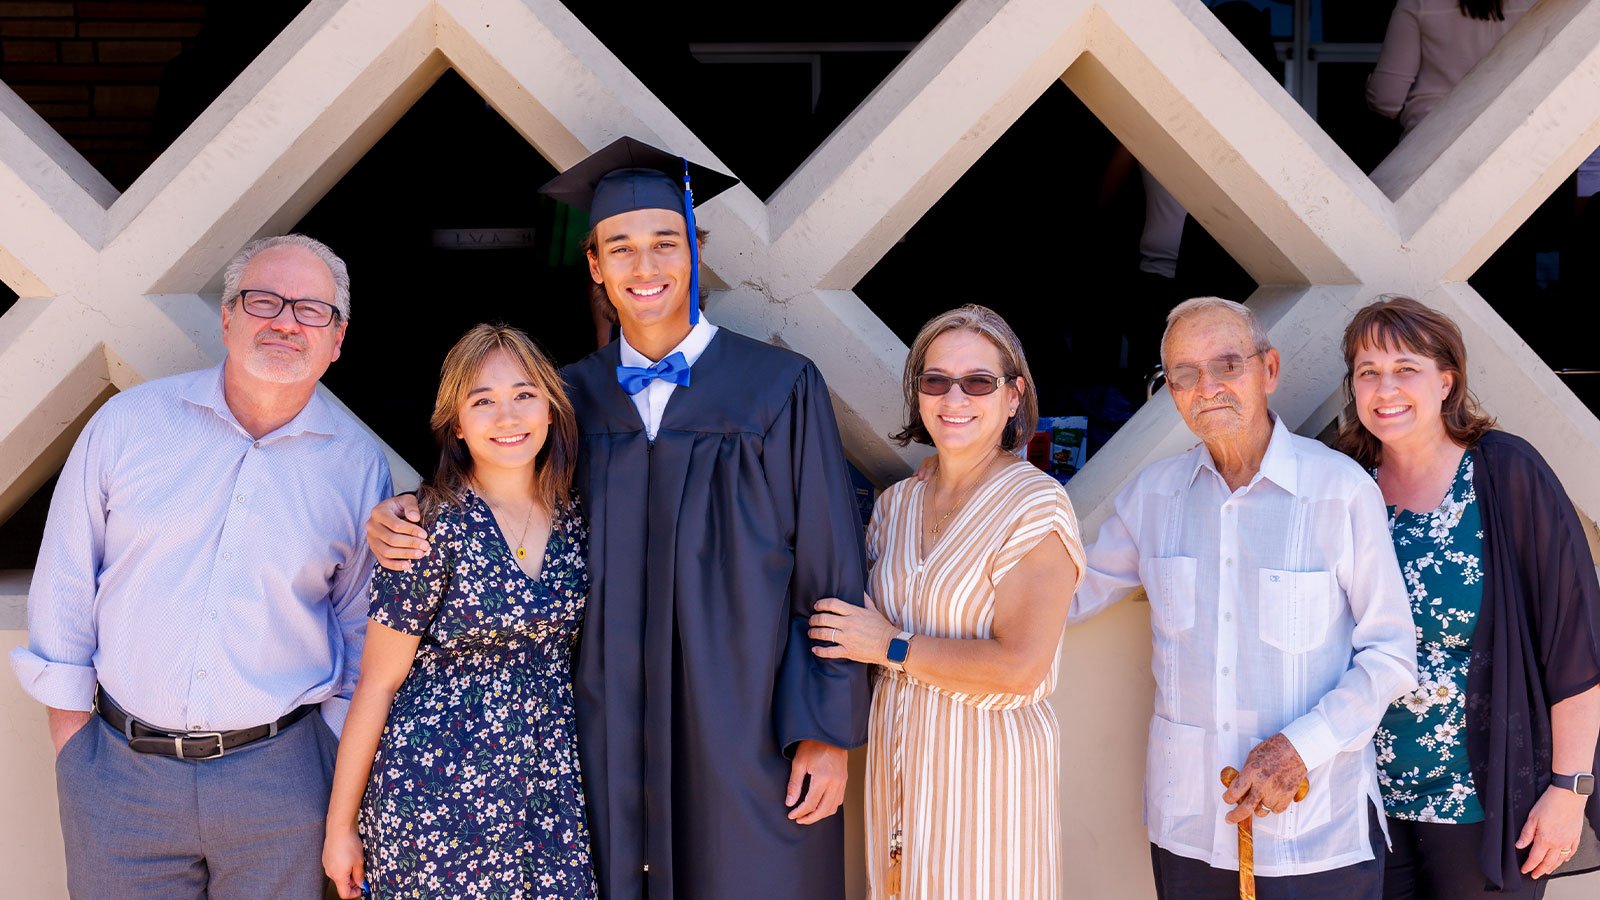 Michael Demara and family on graduation day.